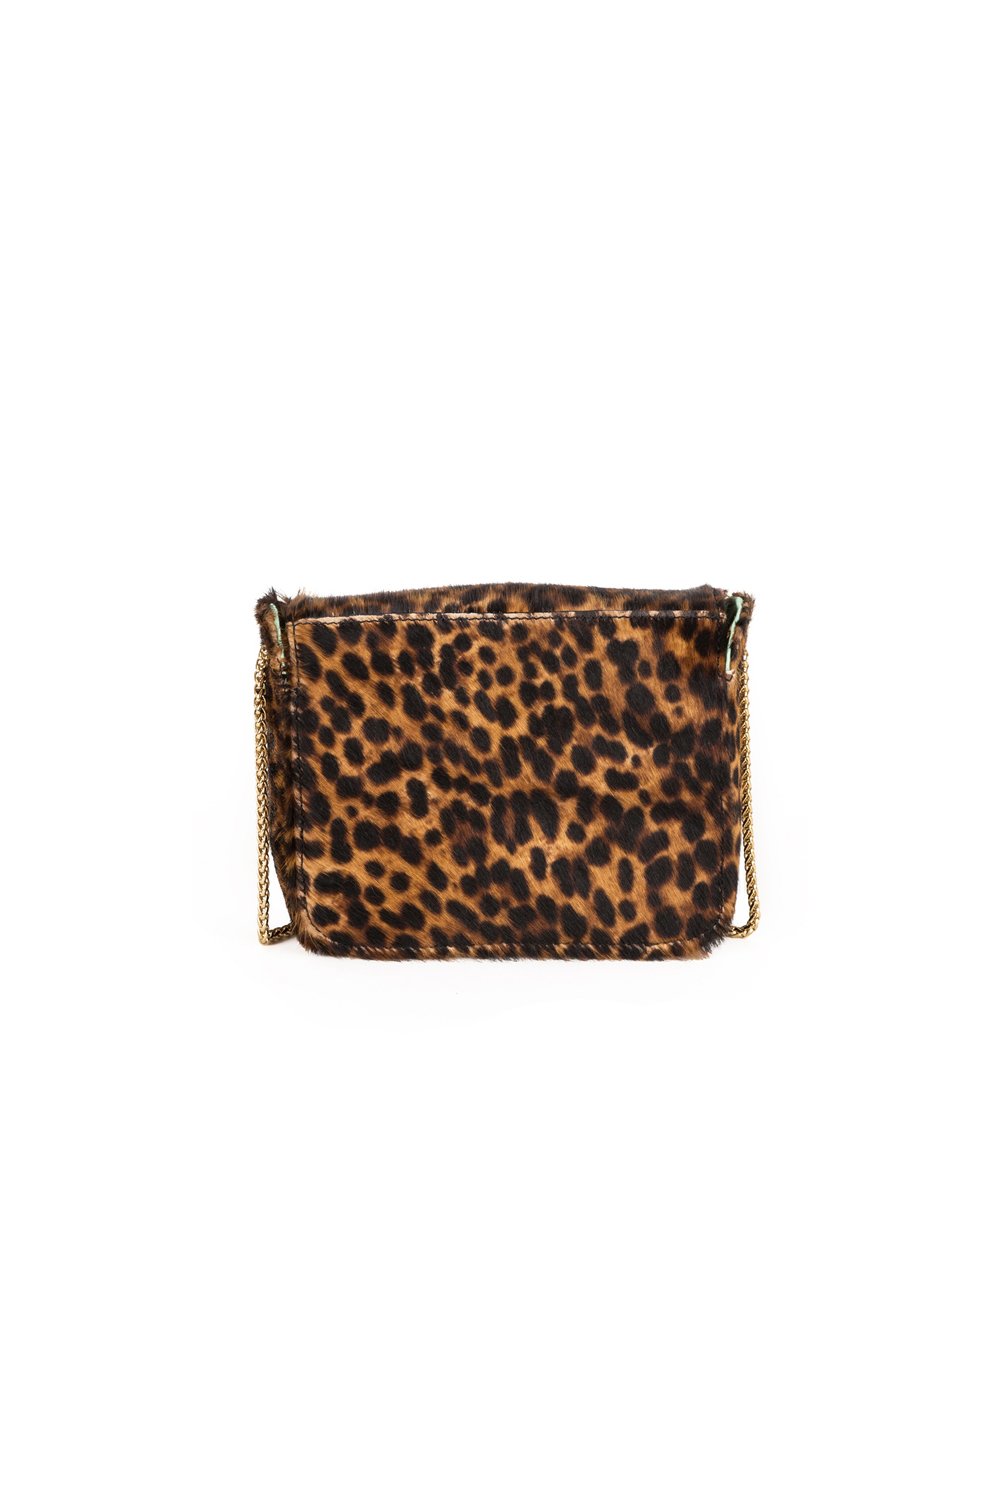 Vivian handbag in leopard printed leather